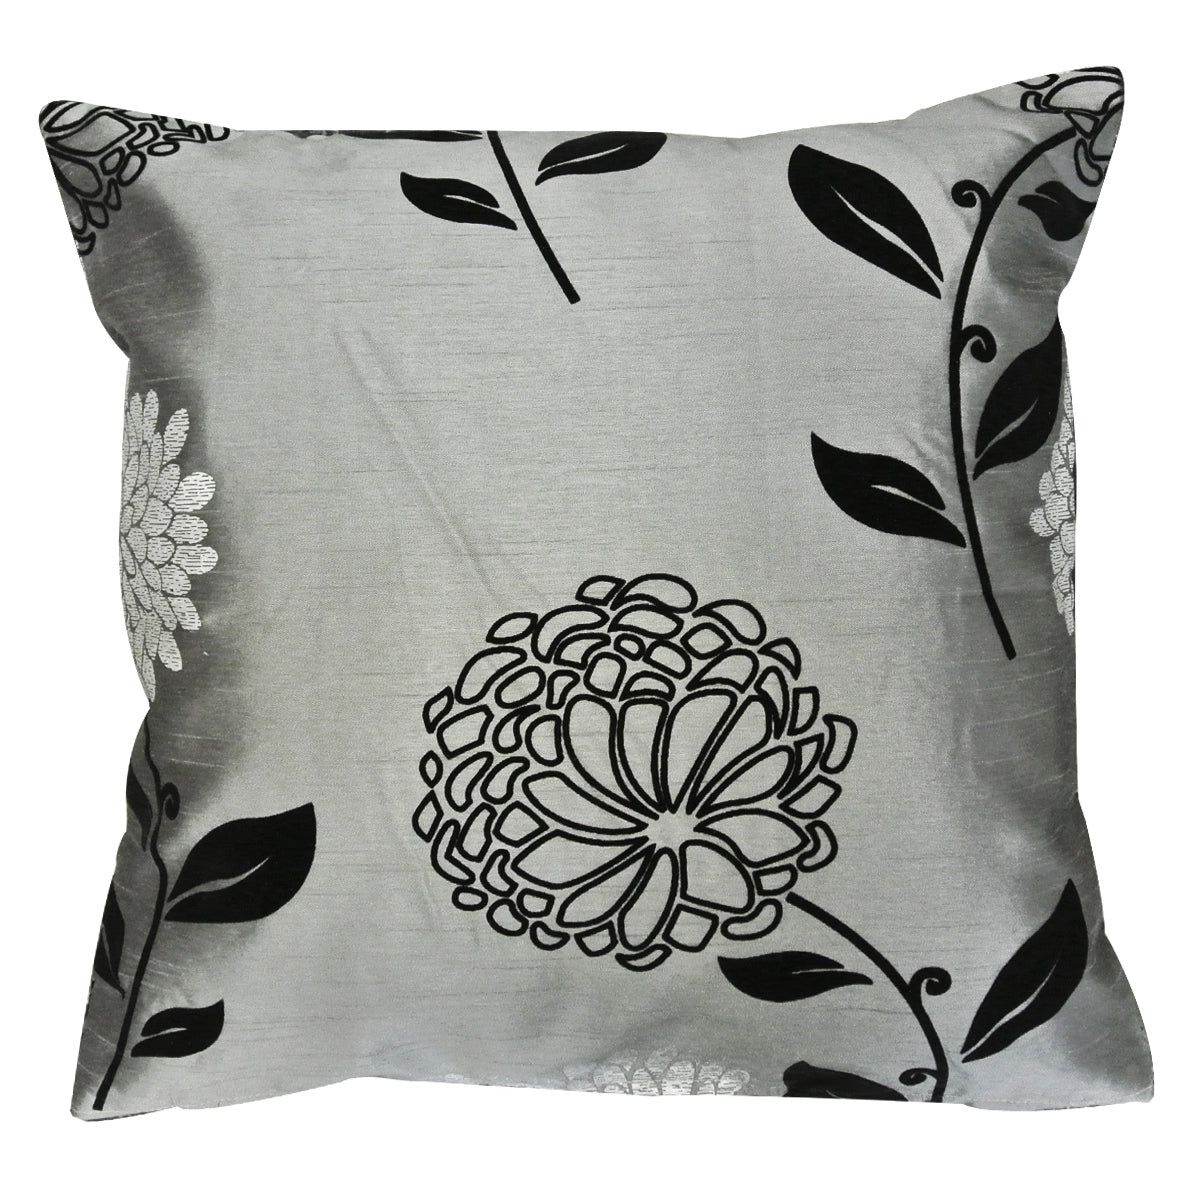 Kella Milla Floral Mums Throw Pillow Cover